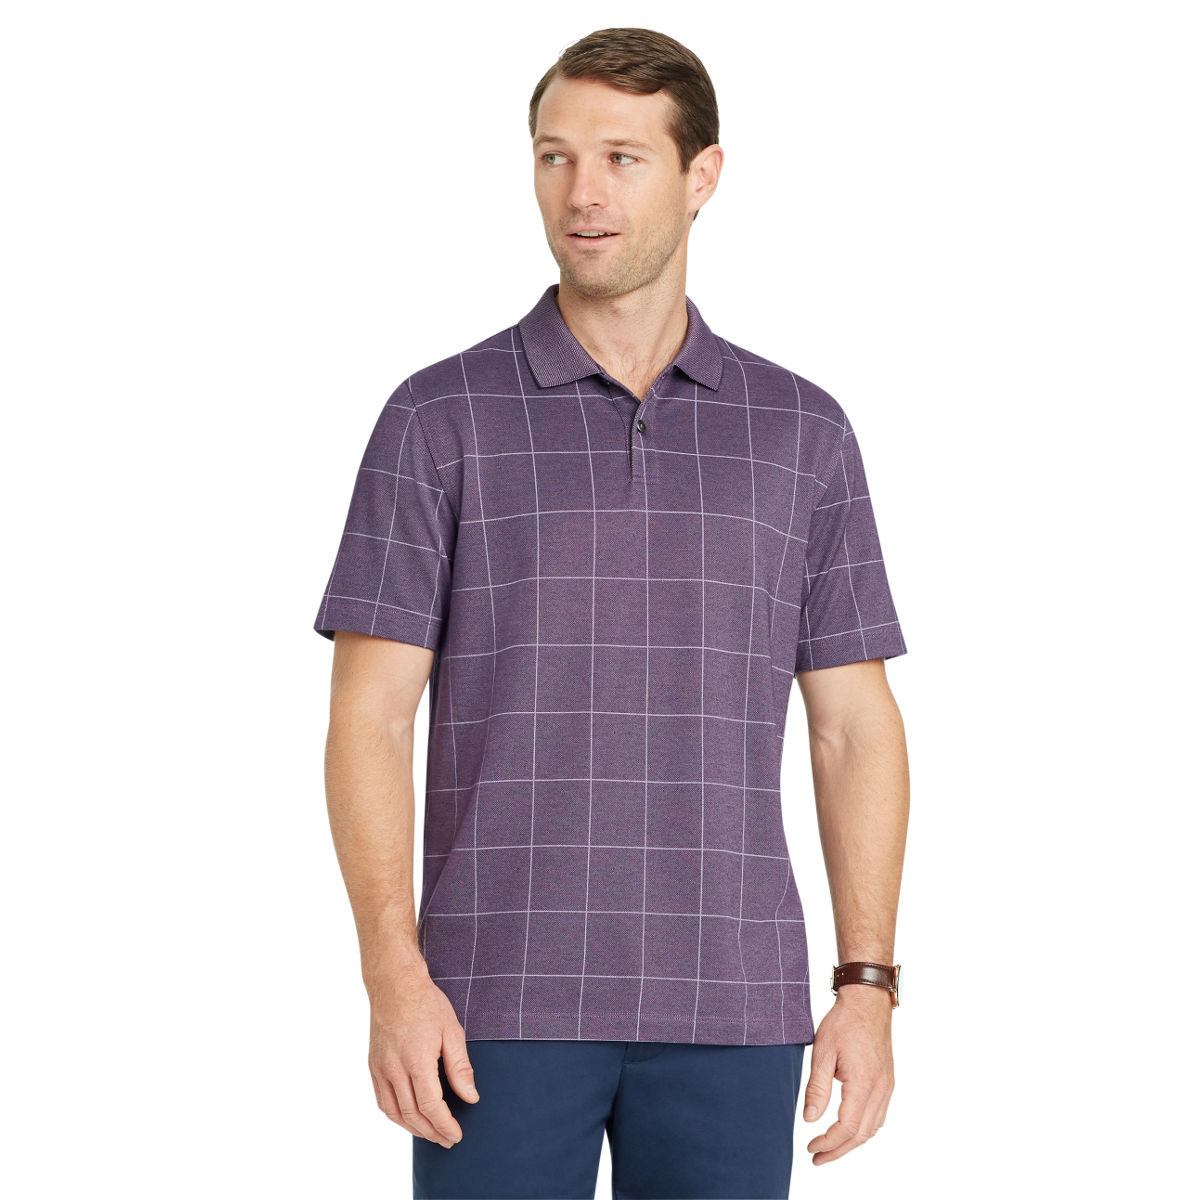 Van Heusen Men's Flex Print Windowpane Short-Sleeve Polo Shirt - Purple, XXL